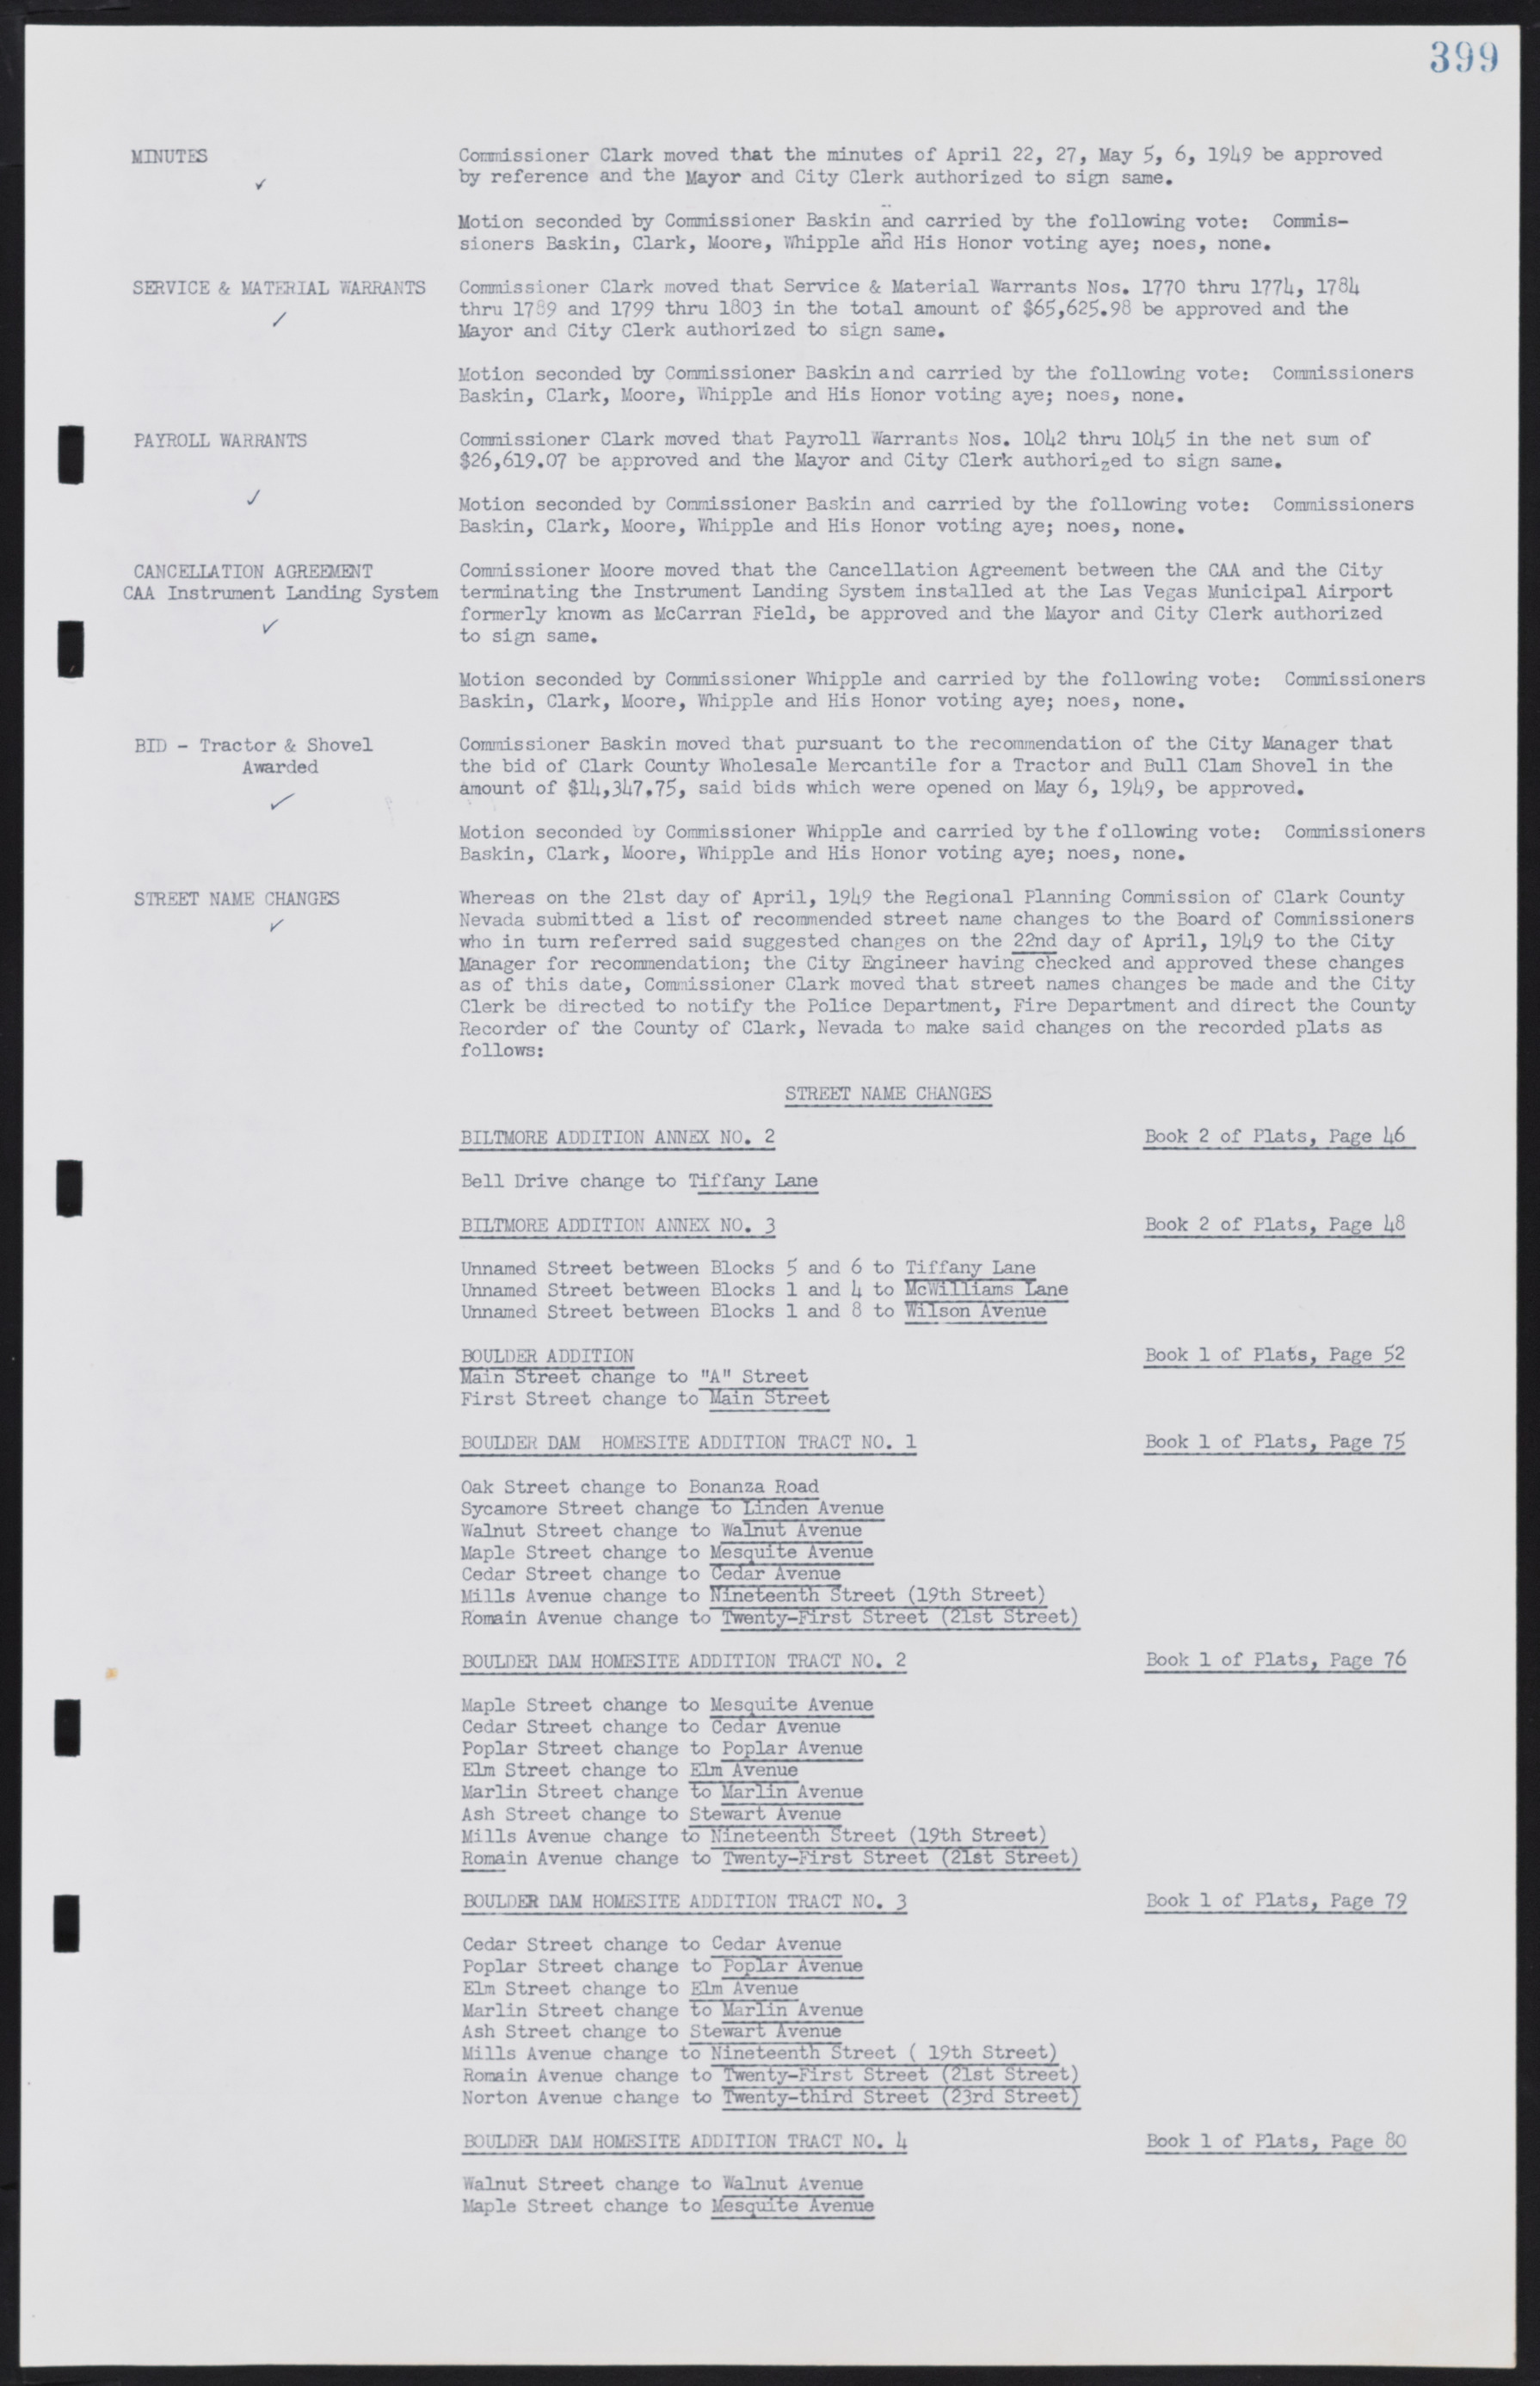 Las Vegas City Commission Minutes, January 7, 1947 to October 26, 1949, lvc000006-429